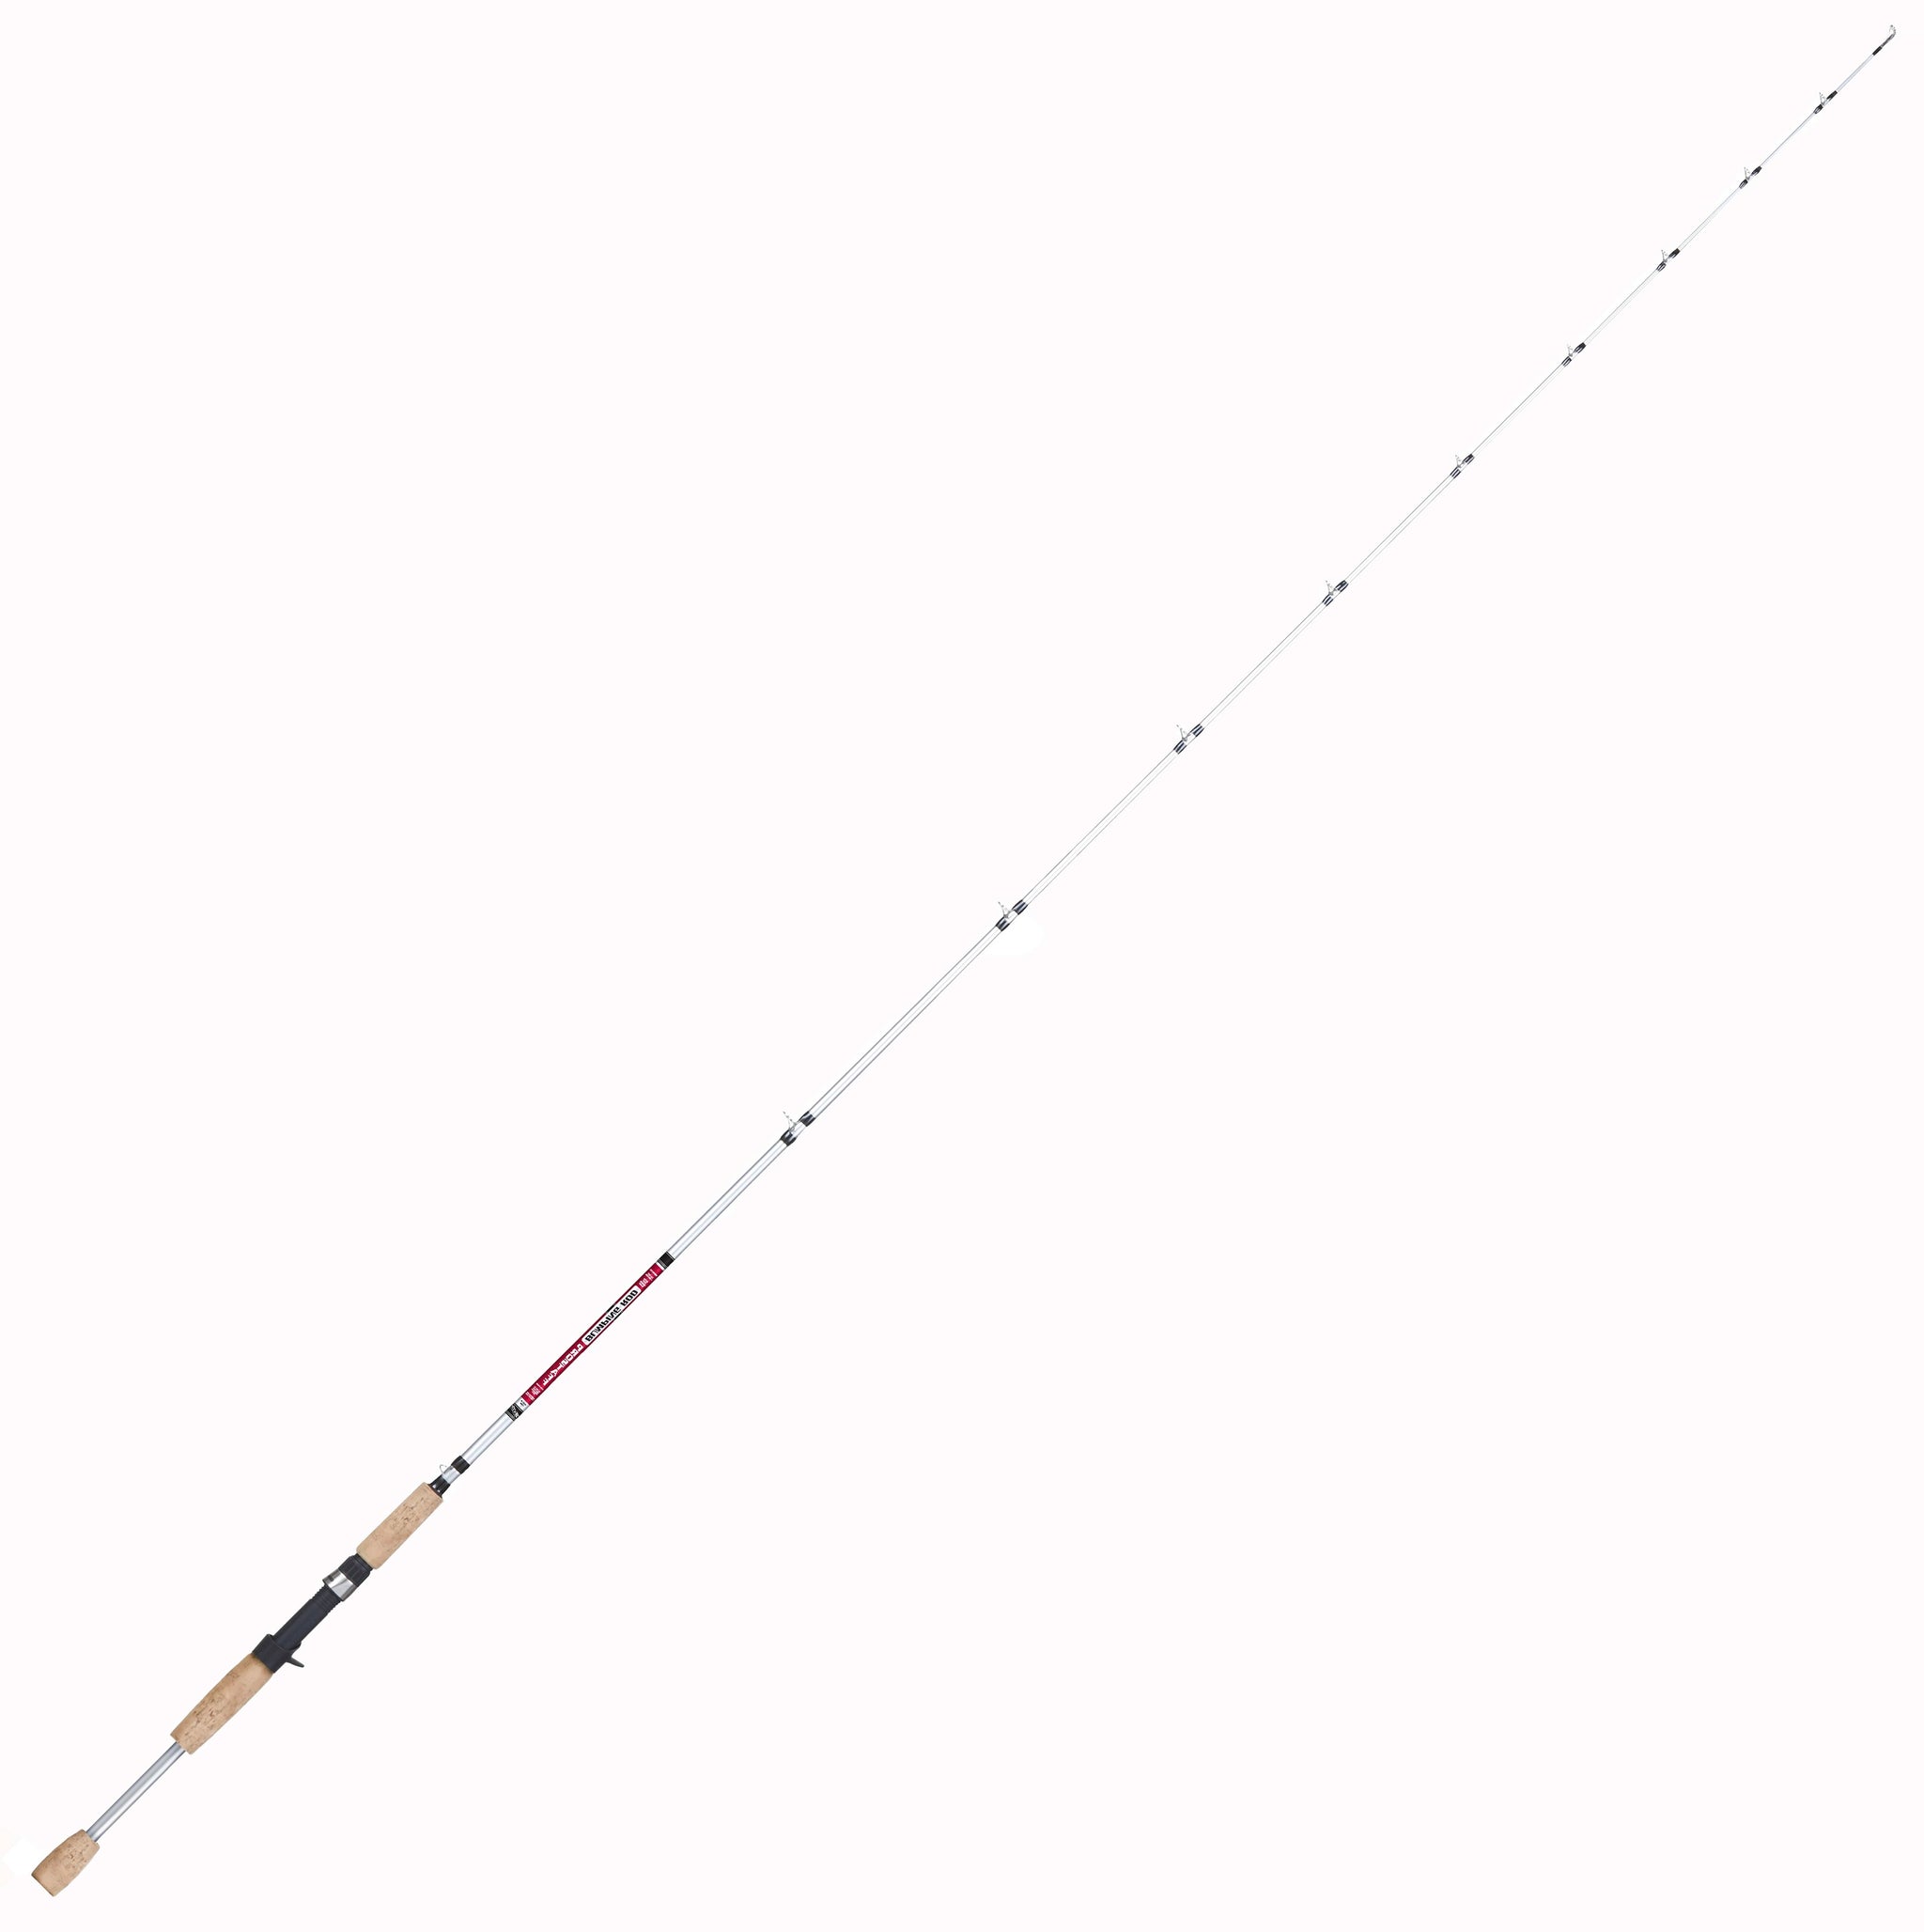 Catfish Gear - B'n'M Pole Company